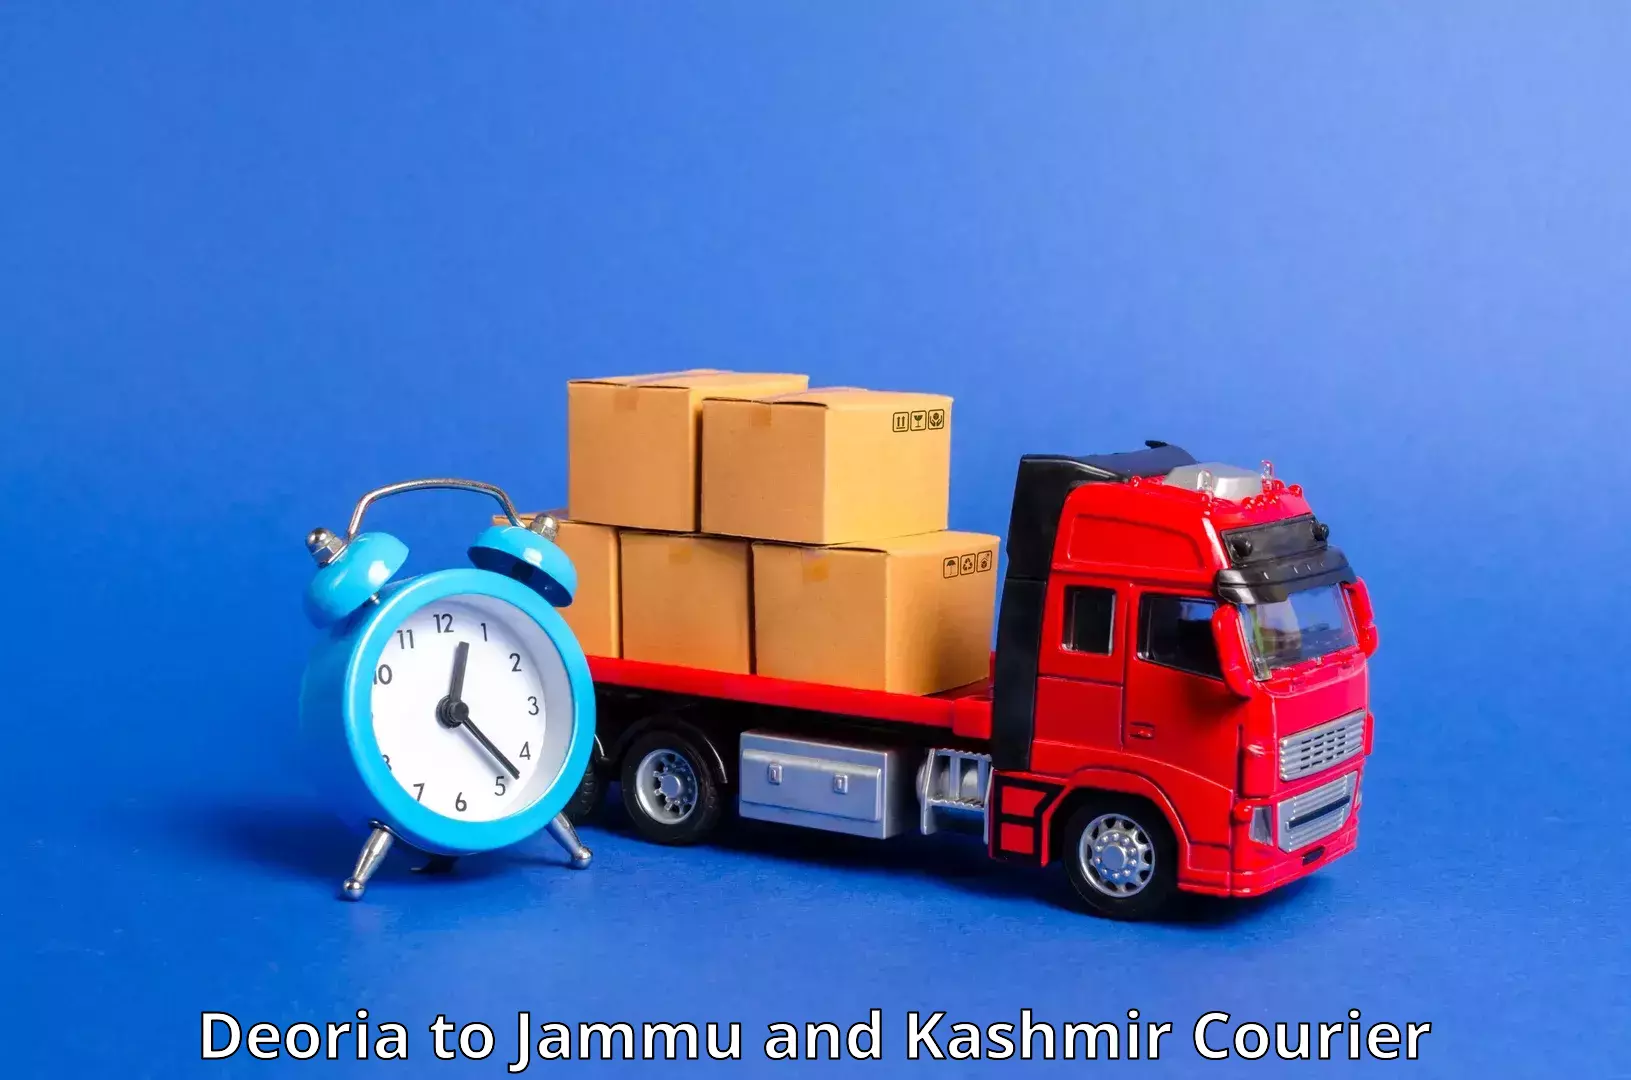 Doorstep delivery service Deoria to Kulgam